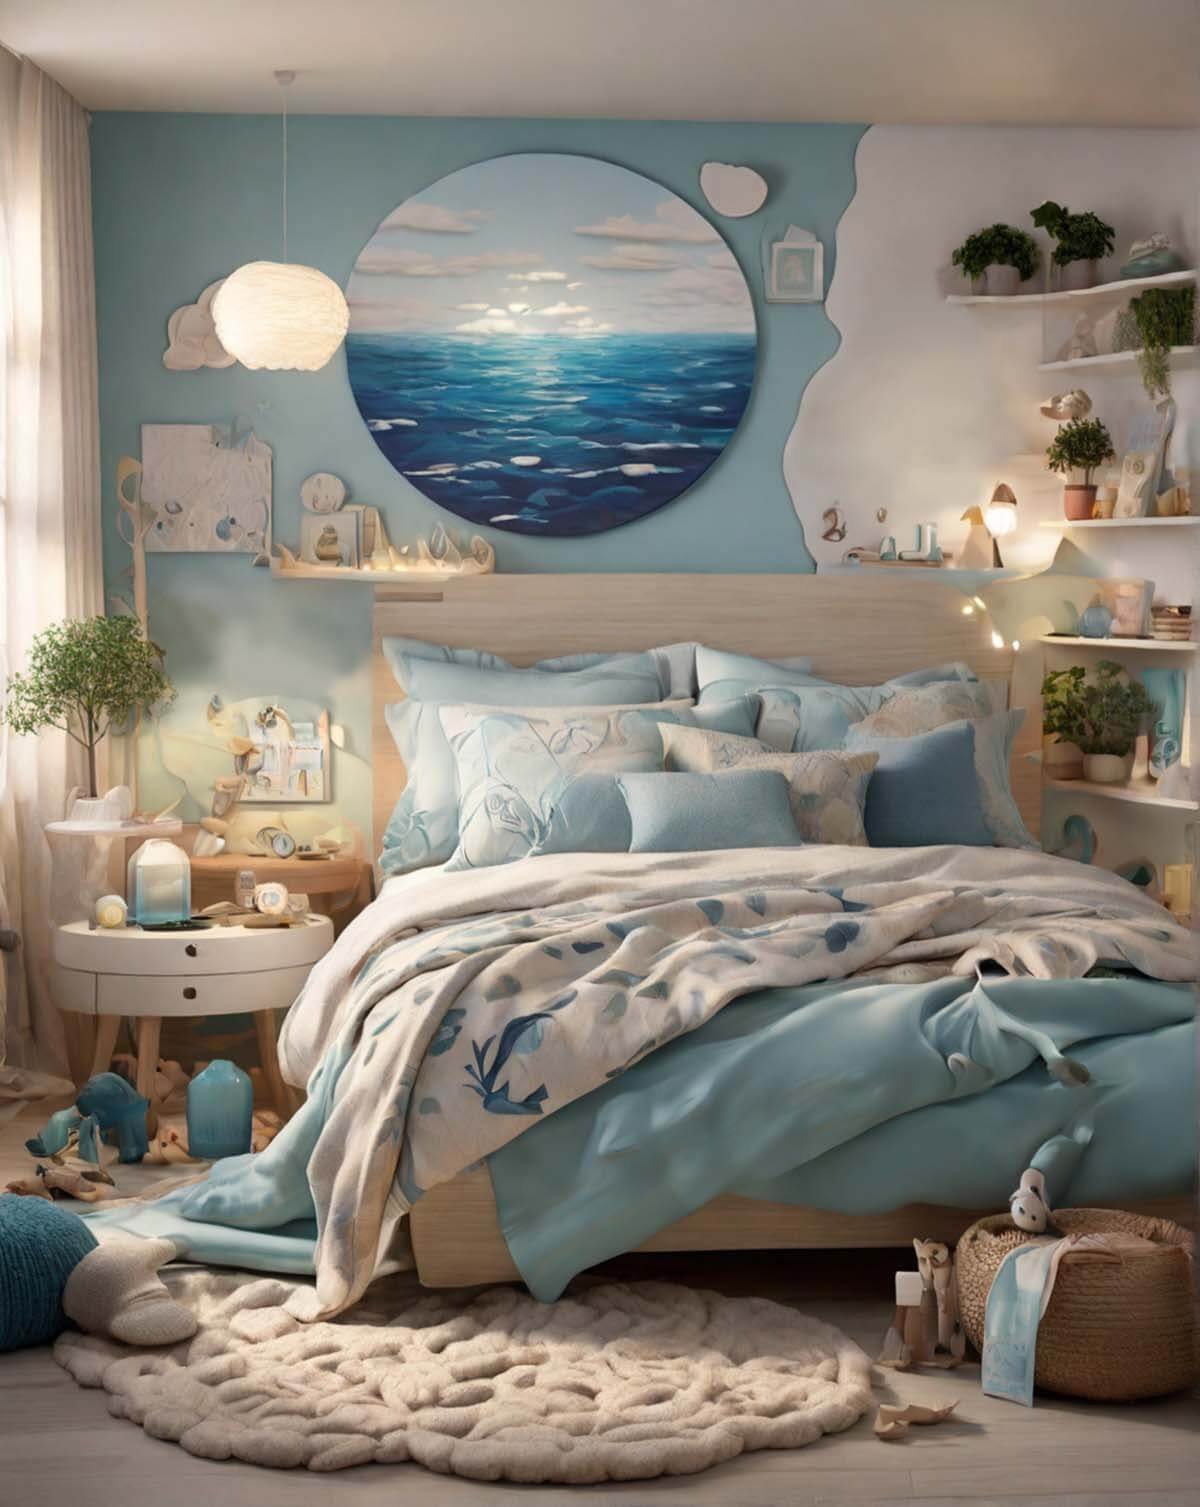 Pisces bedroom decor ideas